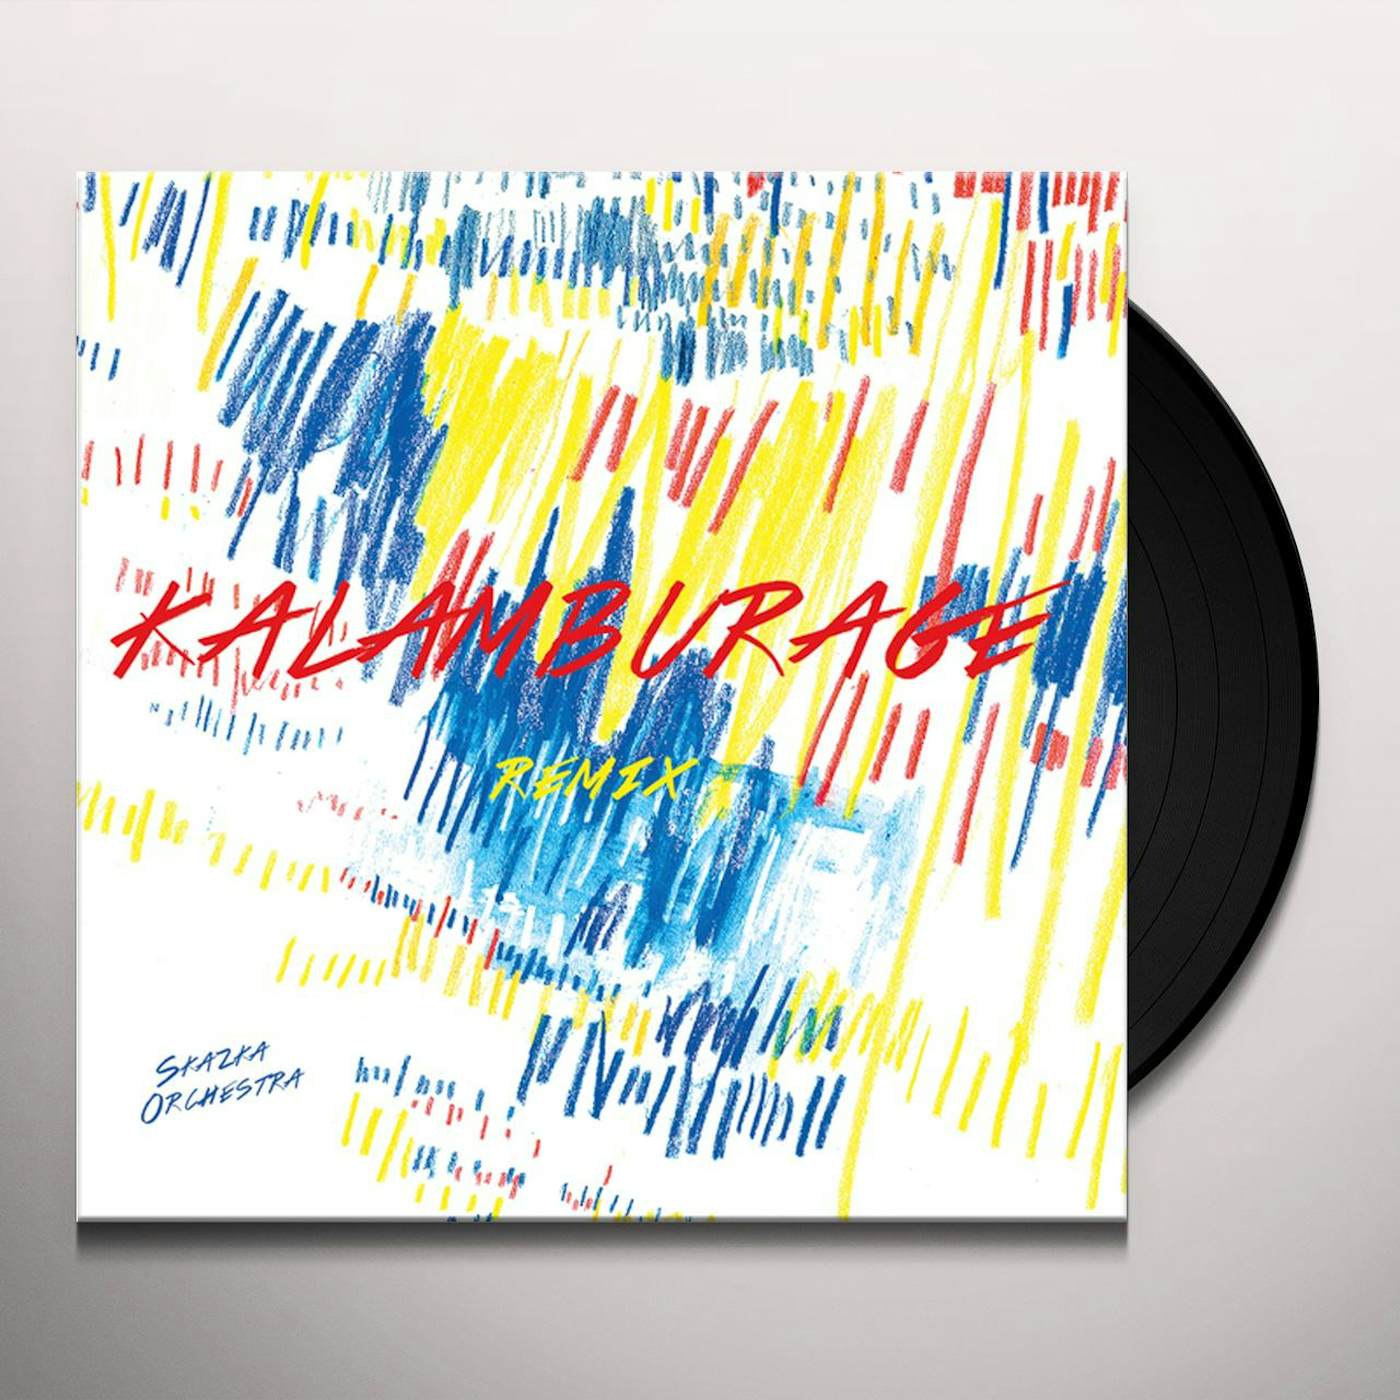 SkaZka Orchestra KALAMBURAGE - REMIXES Vinyl Record